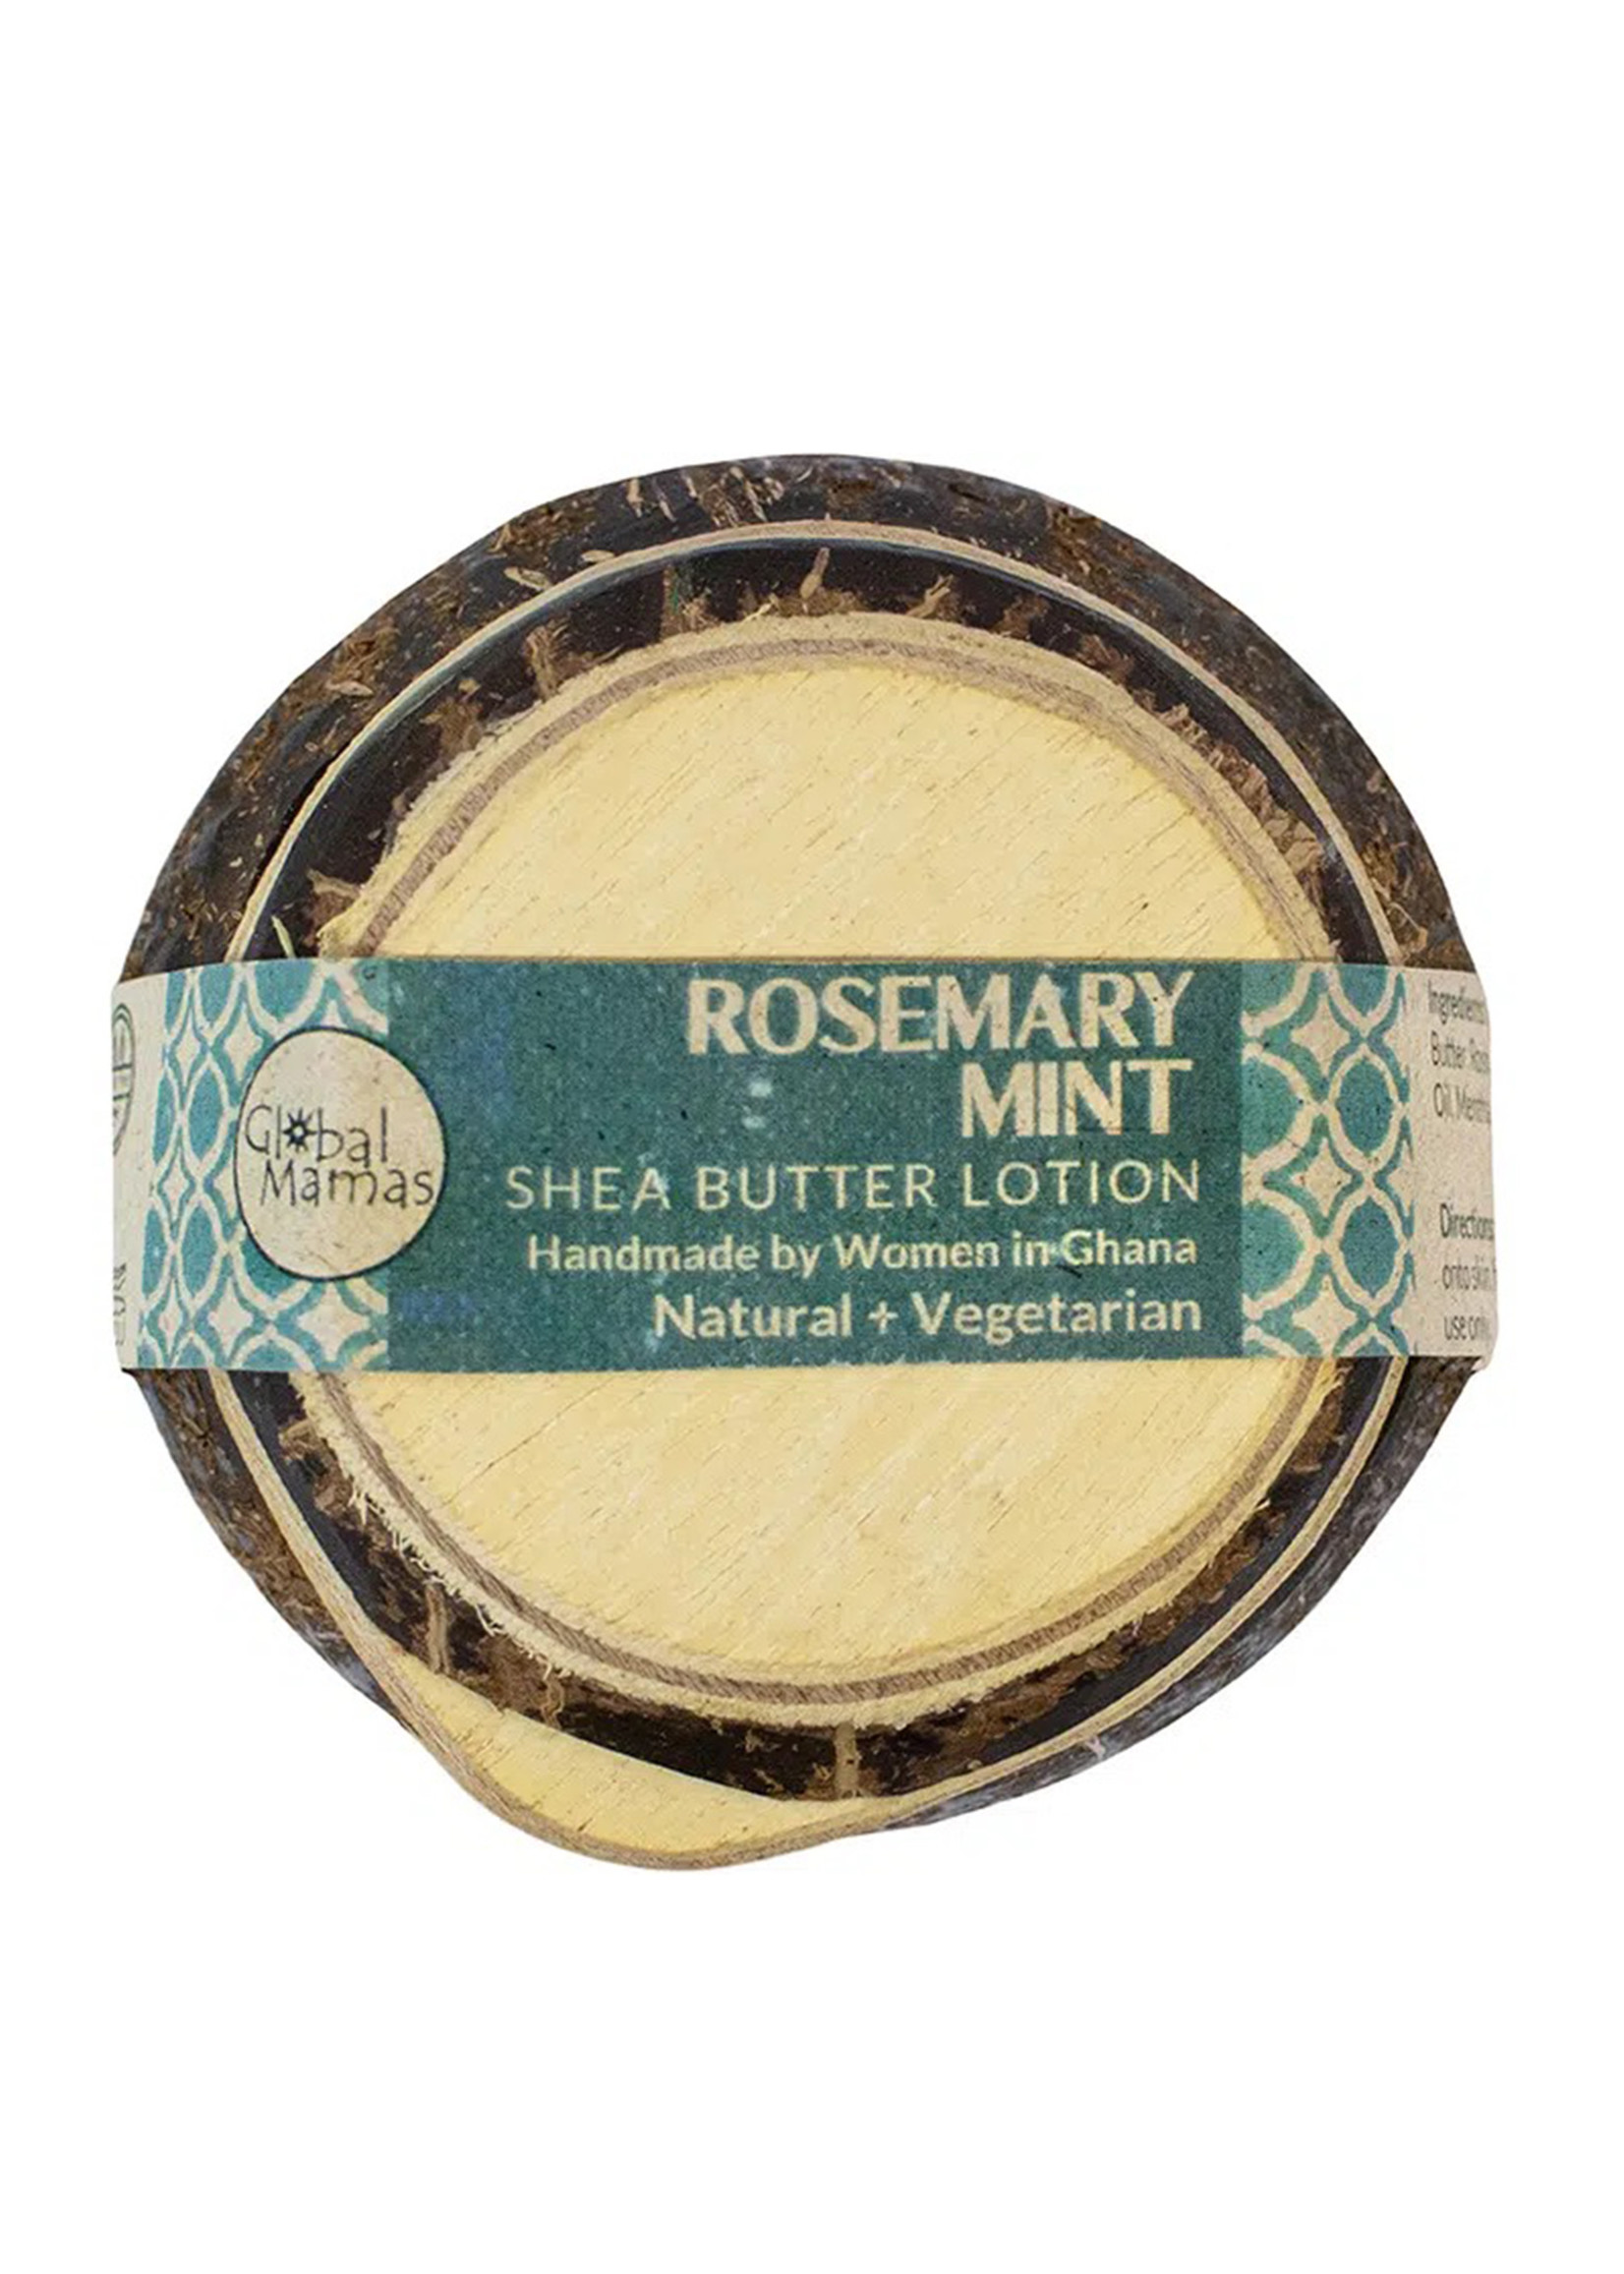 Global Mamas Rosemary Mint Shea Butter Lotion